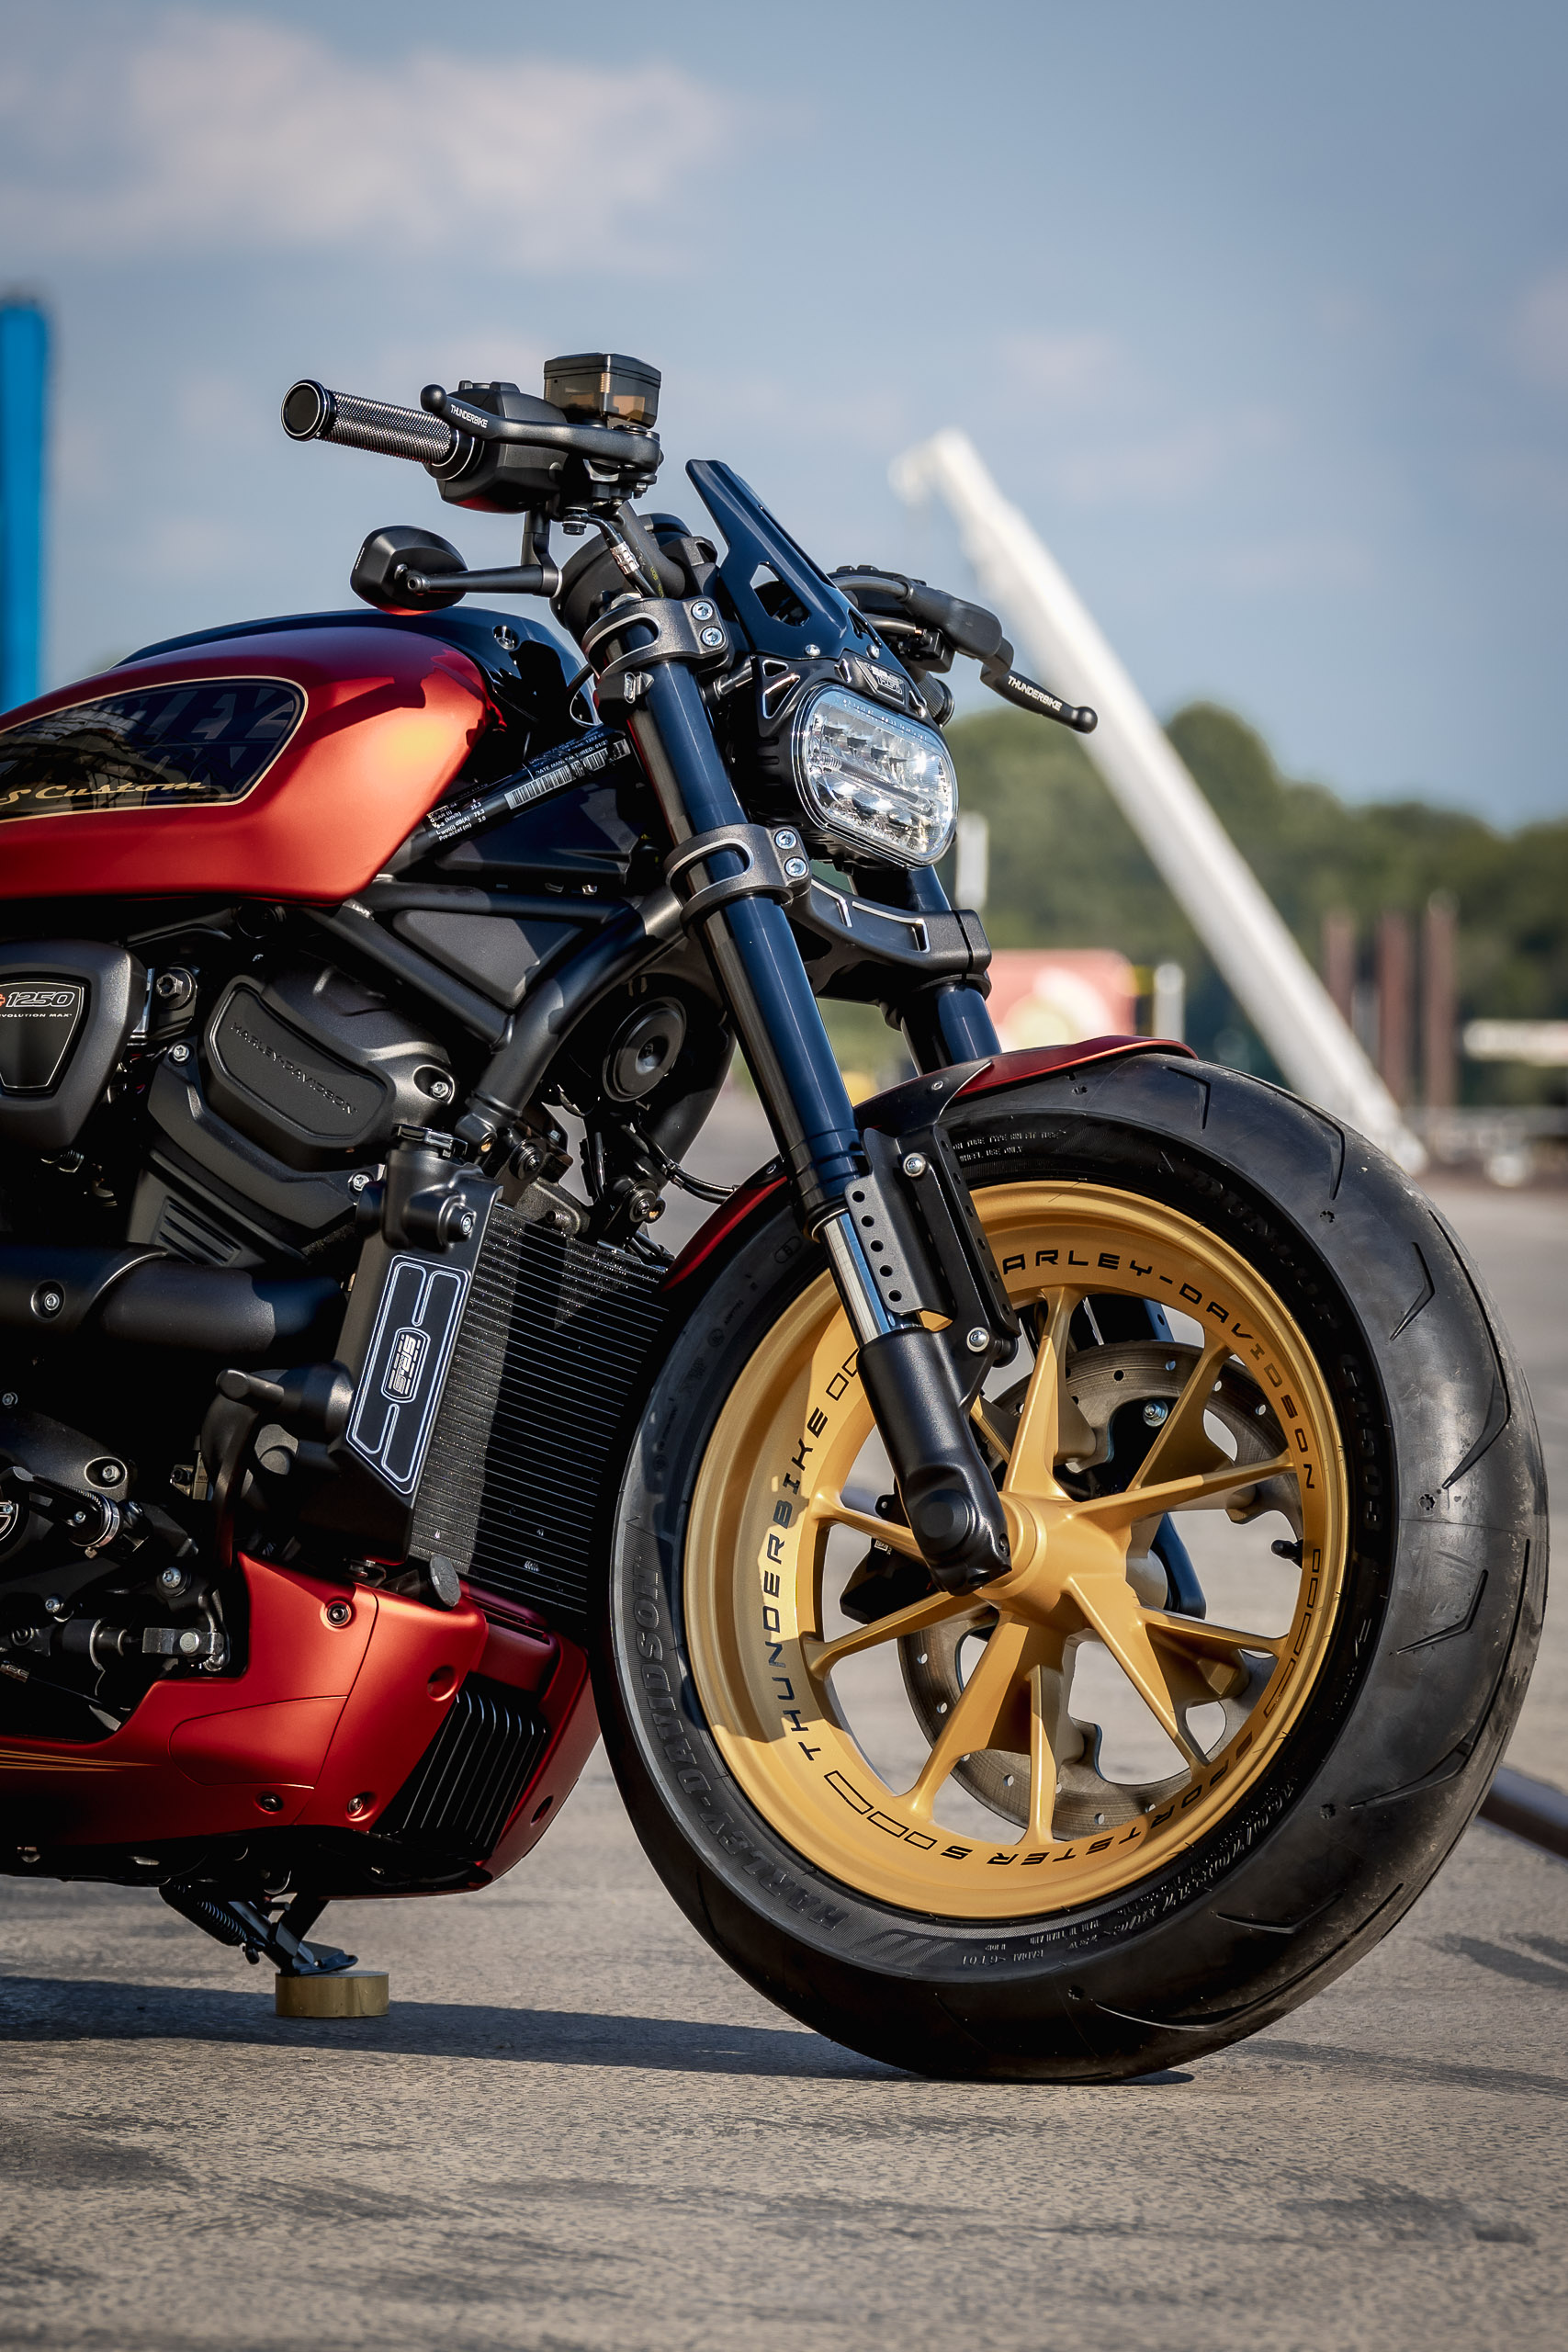 For Harley Sportster S 1250 RH1250S RH1250 RH 1250 S Motorcycle Accessories  Rear Rocker Arm Cover